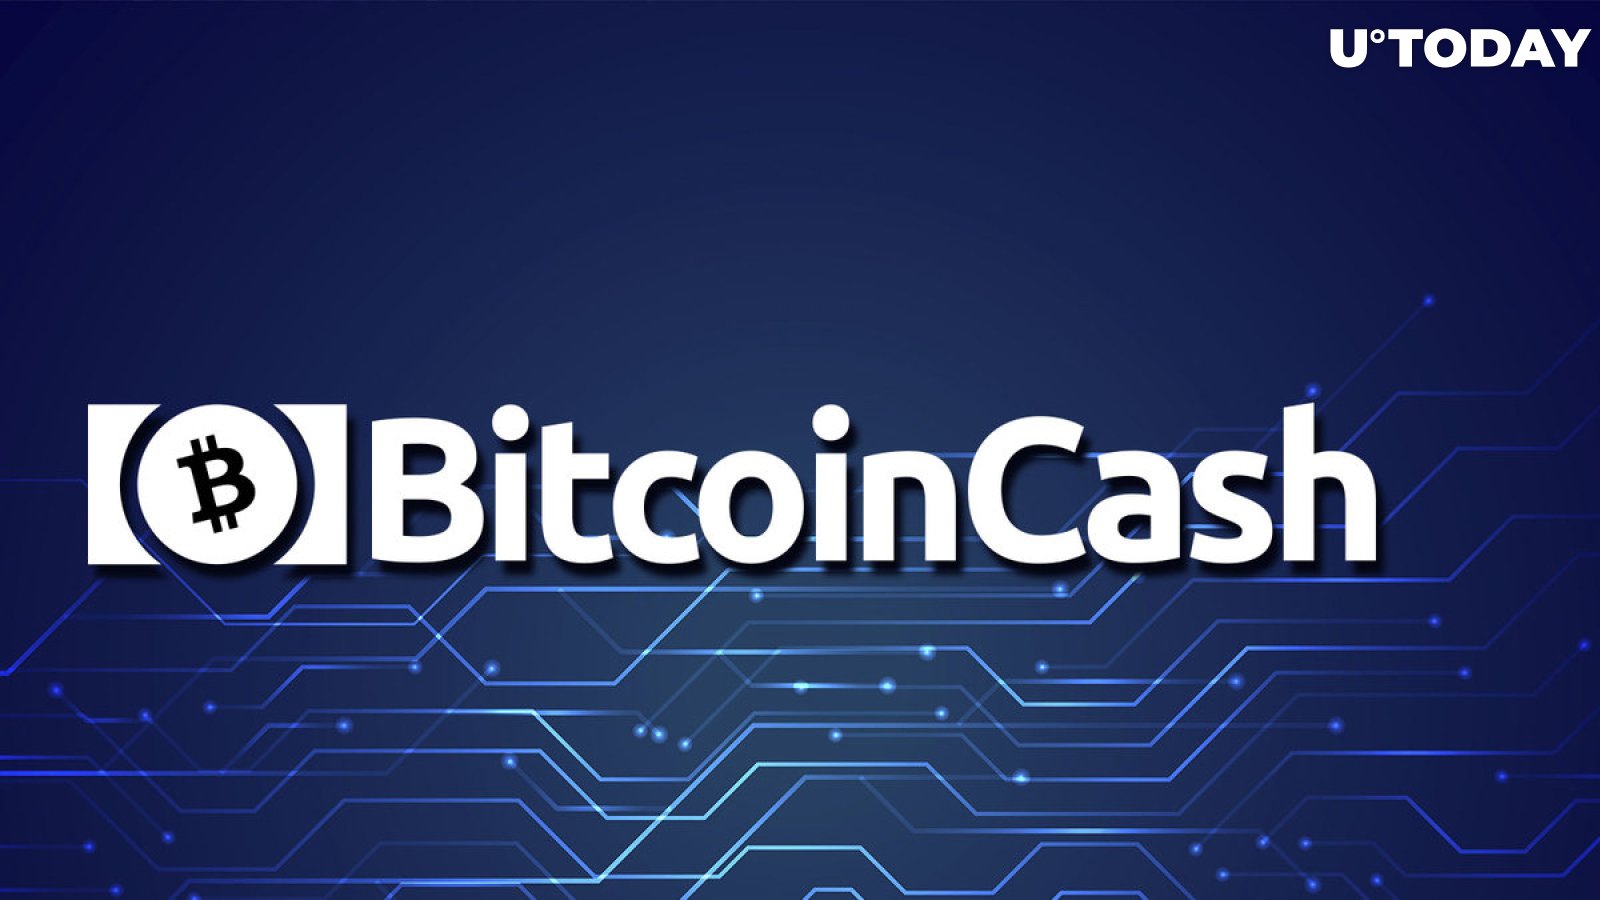 Bitcoin Cash (BCH) to Receive Key Upgrade: Details